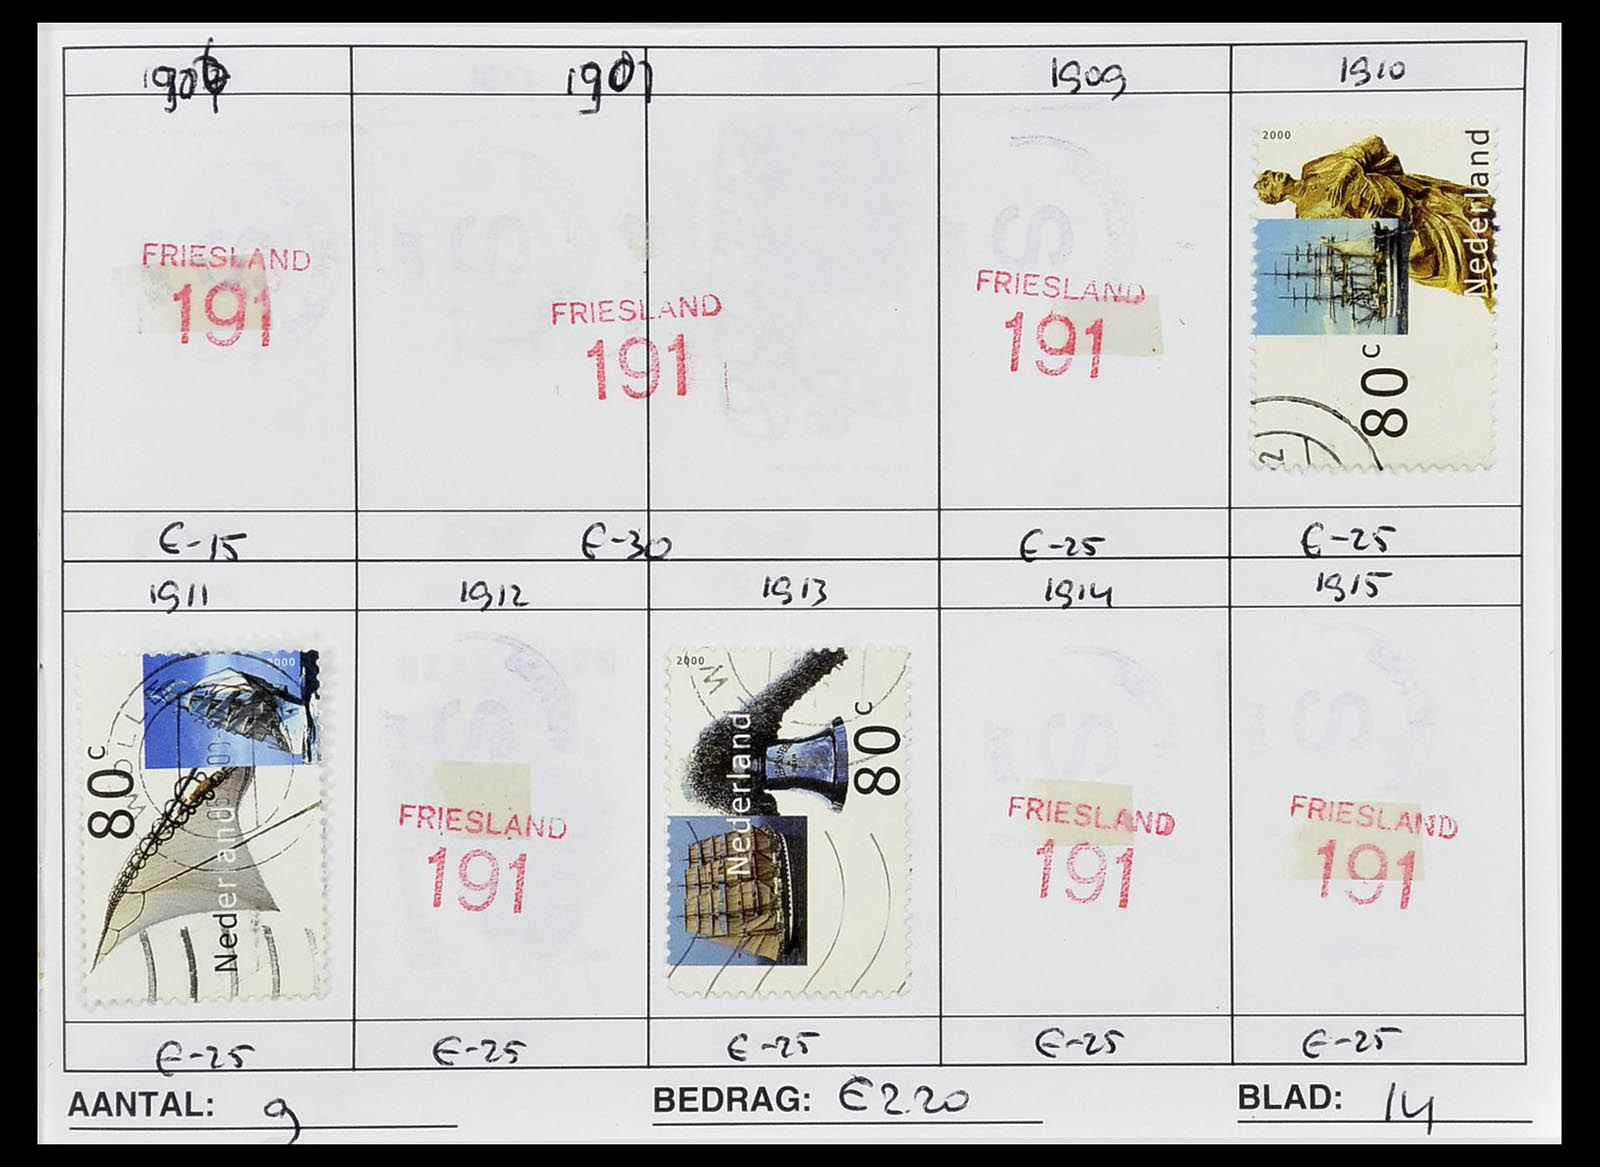 34612 0997 - Stamp Collection 34612 Wereld rondzendboekjes.